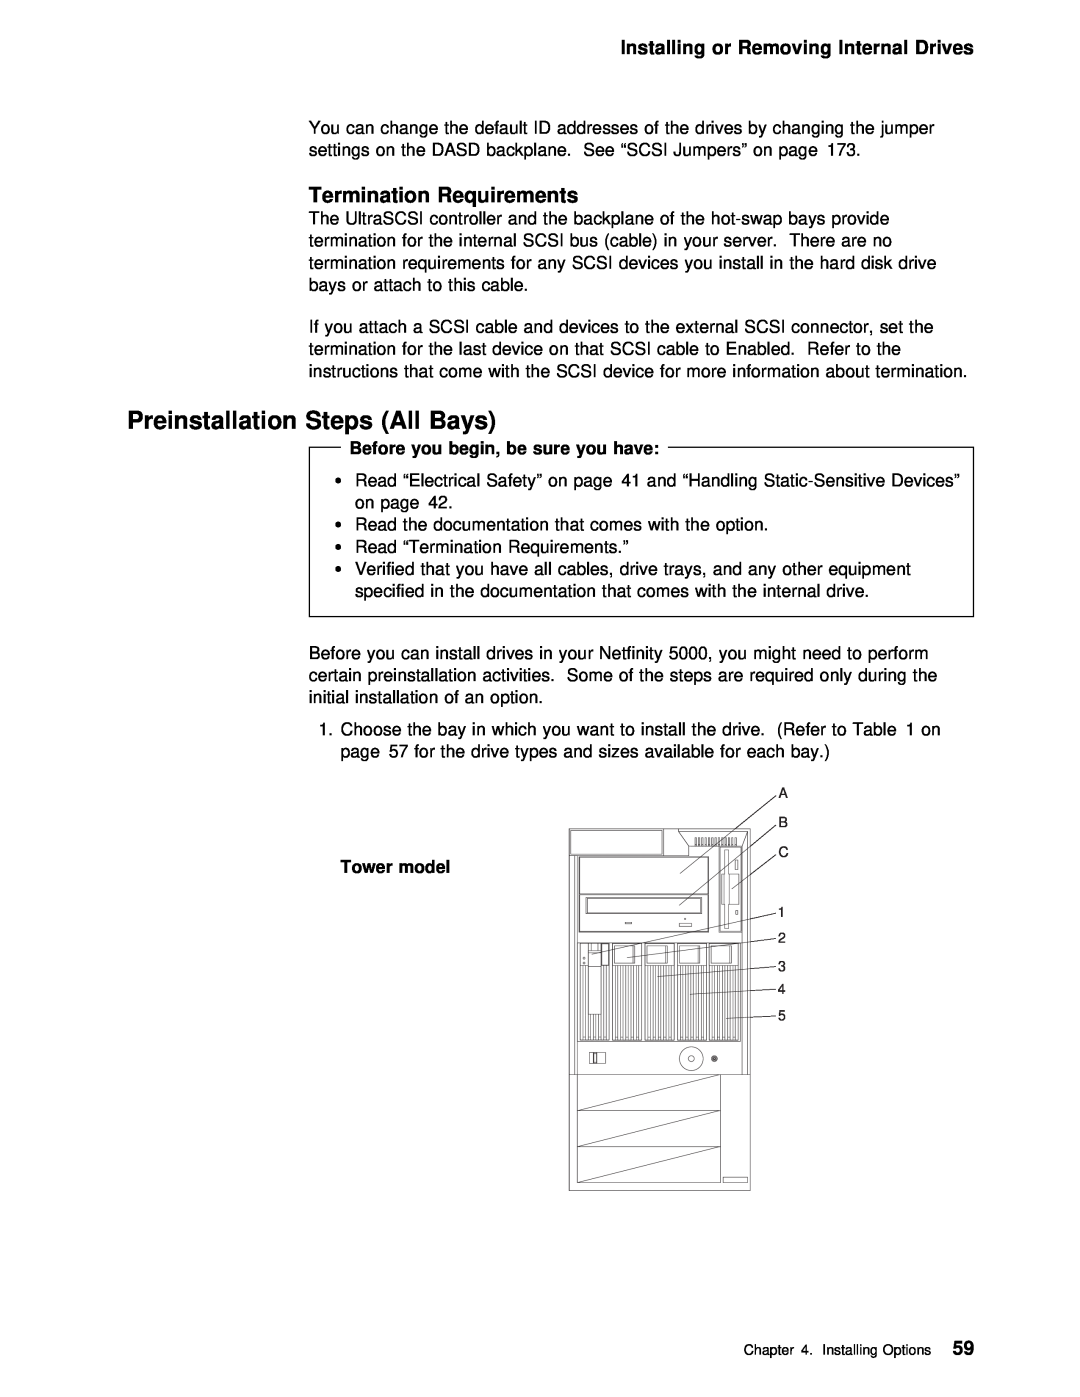 IBM 5000 manual Bays, Preinstallation Steps, Termination Requirements, Installing or Removing Internal Drives 